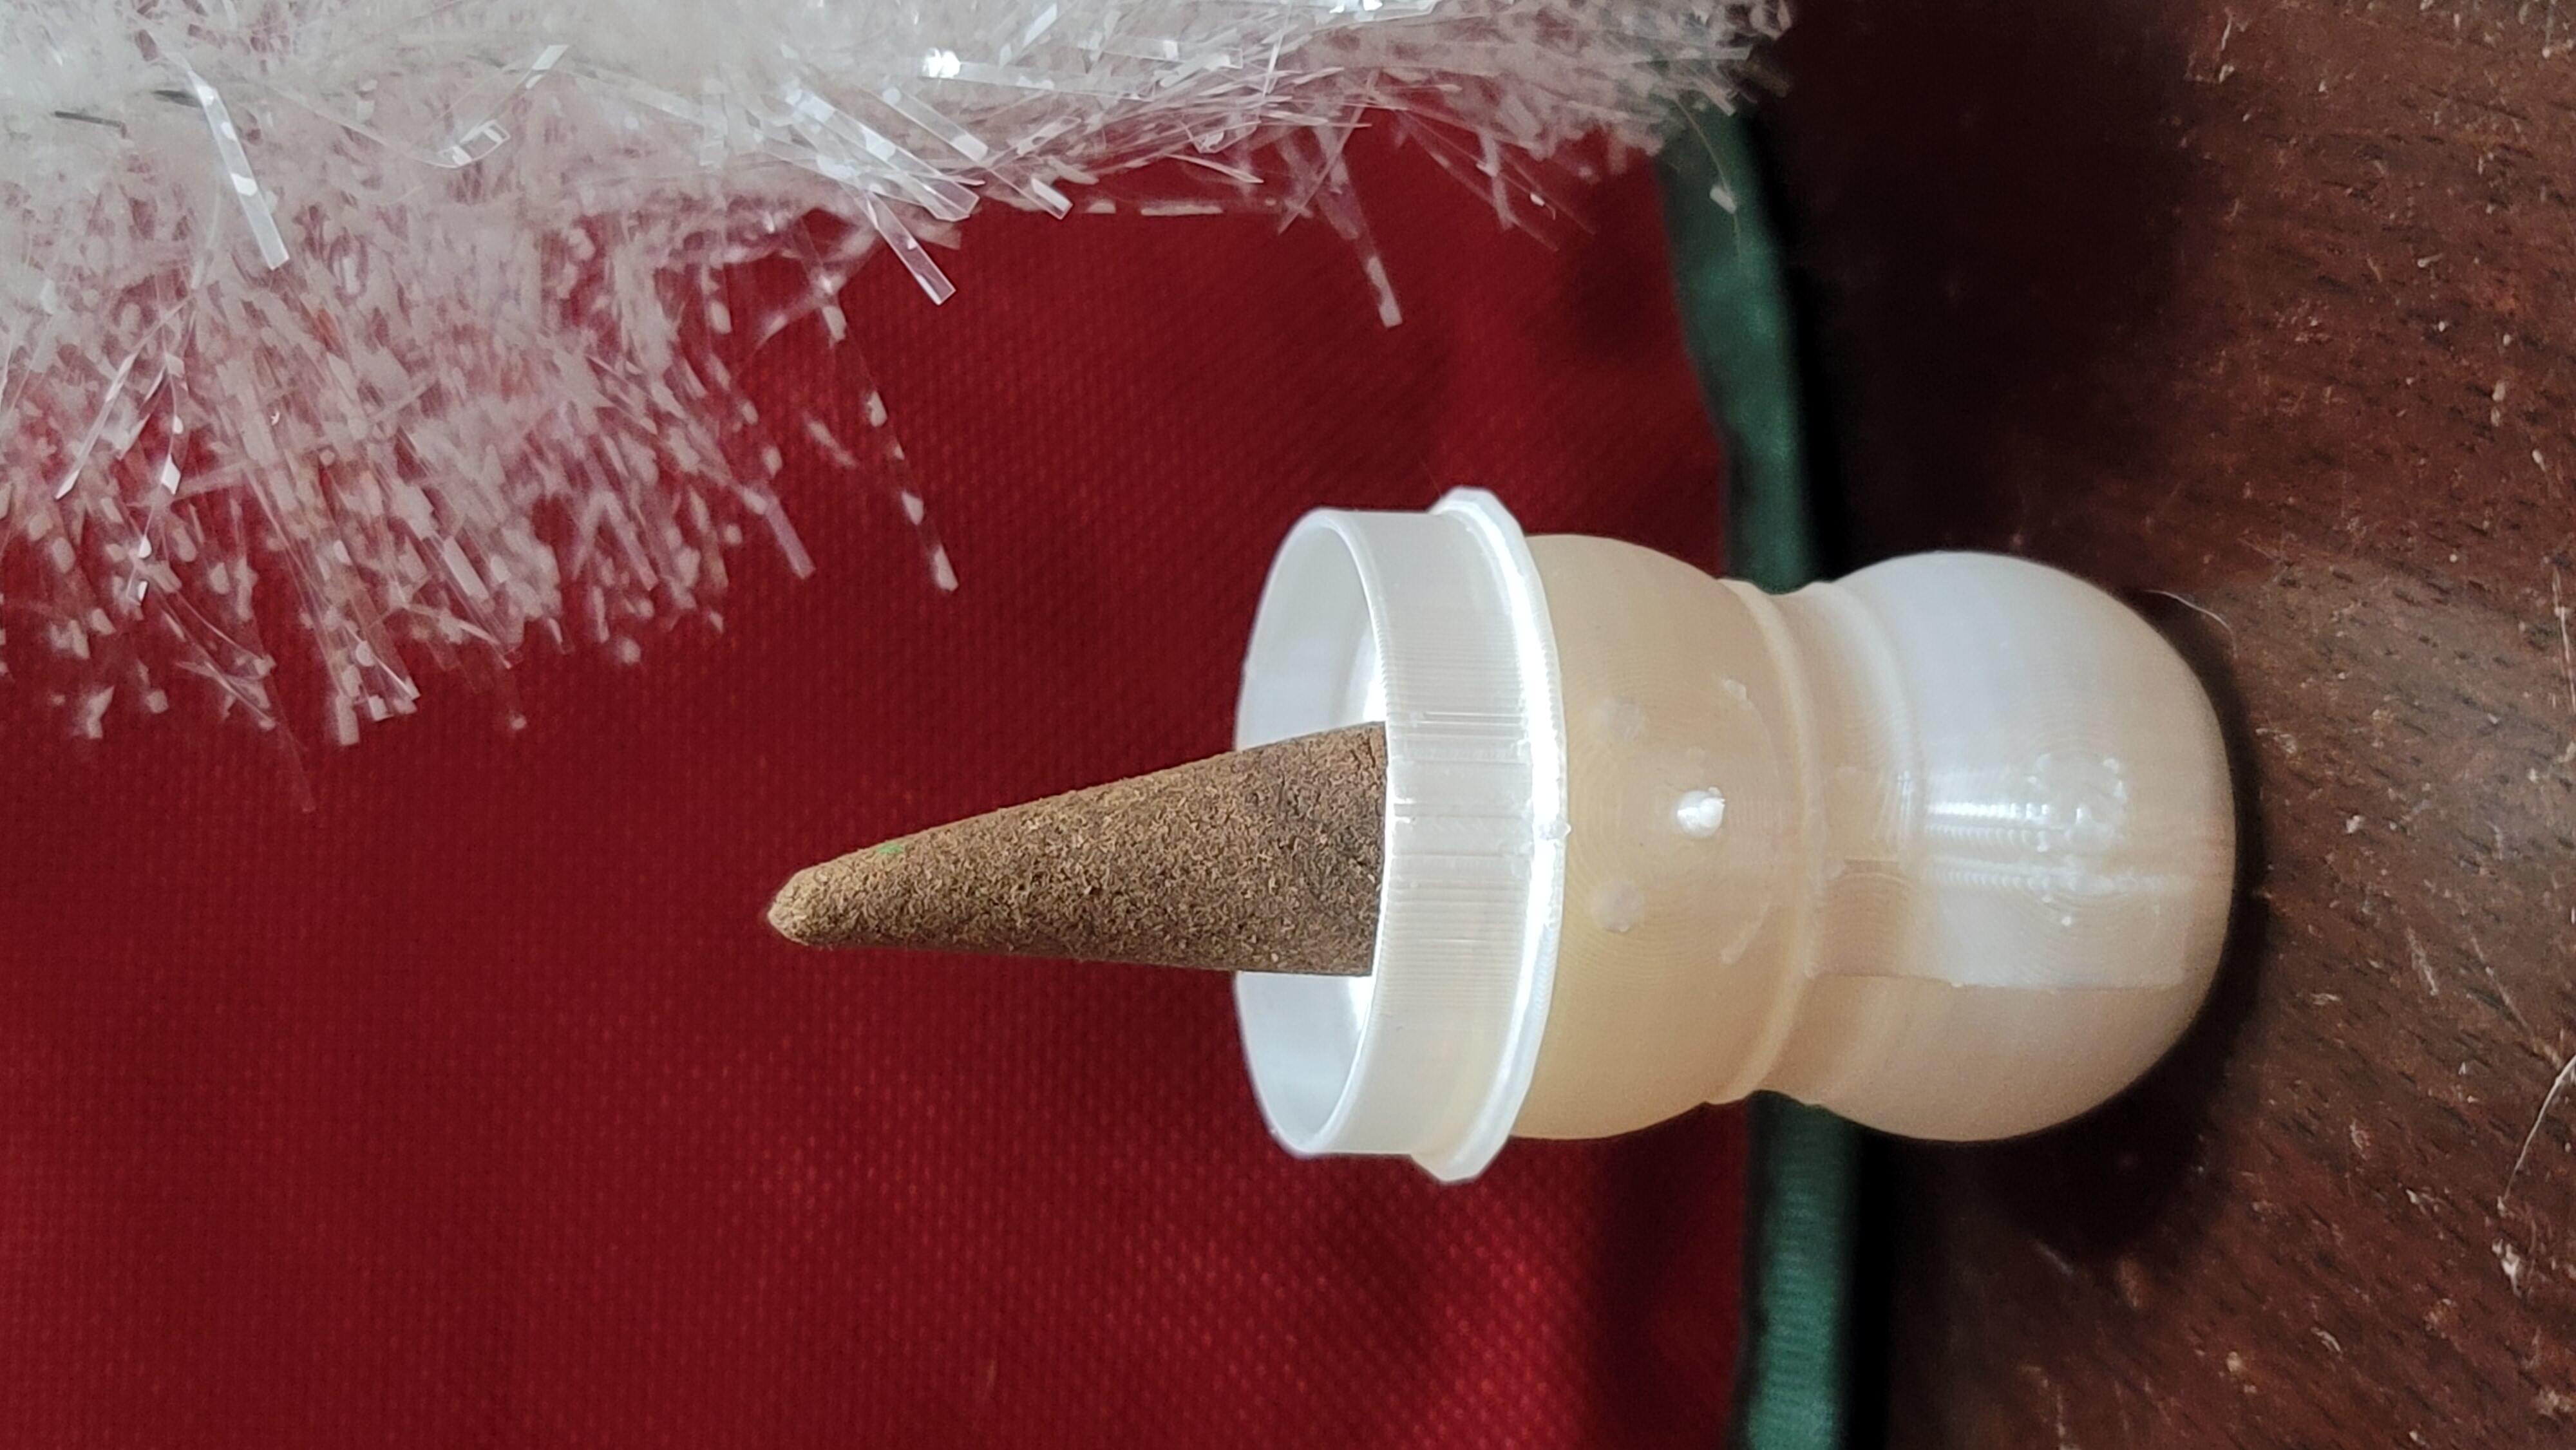 Snowman Cone Incense Holder